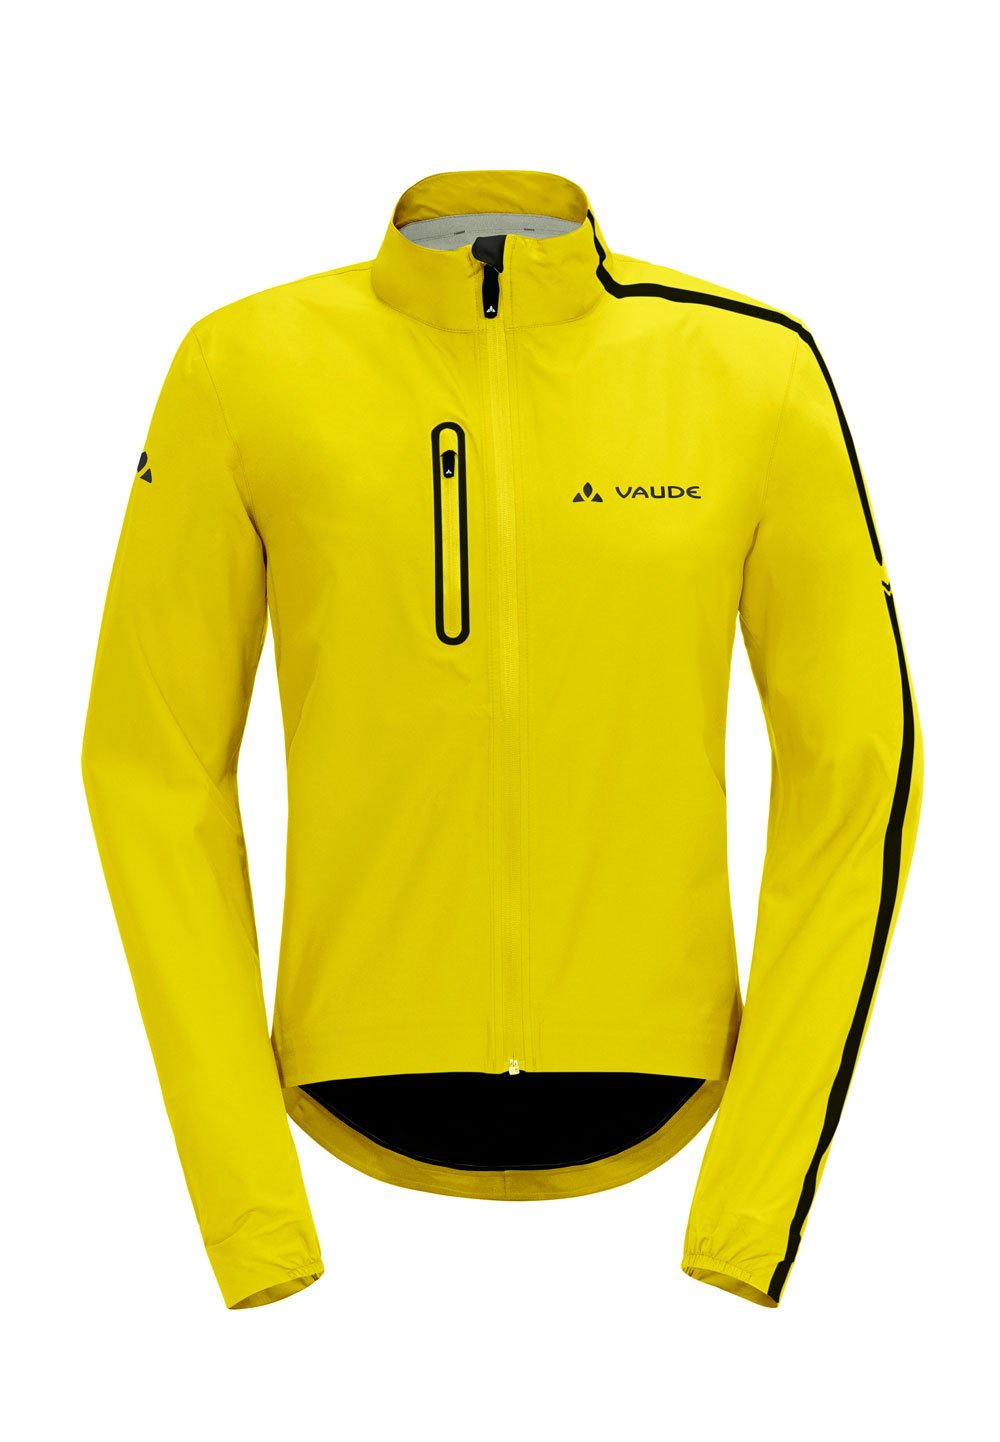 Велокуртка VAUDE Men's Sky Fly Jacket II 125, canary, ярко желтый, мужская, 4972 футболка мужская bask topography желтый